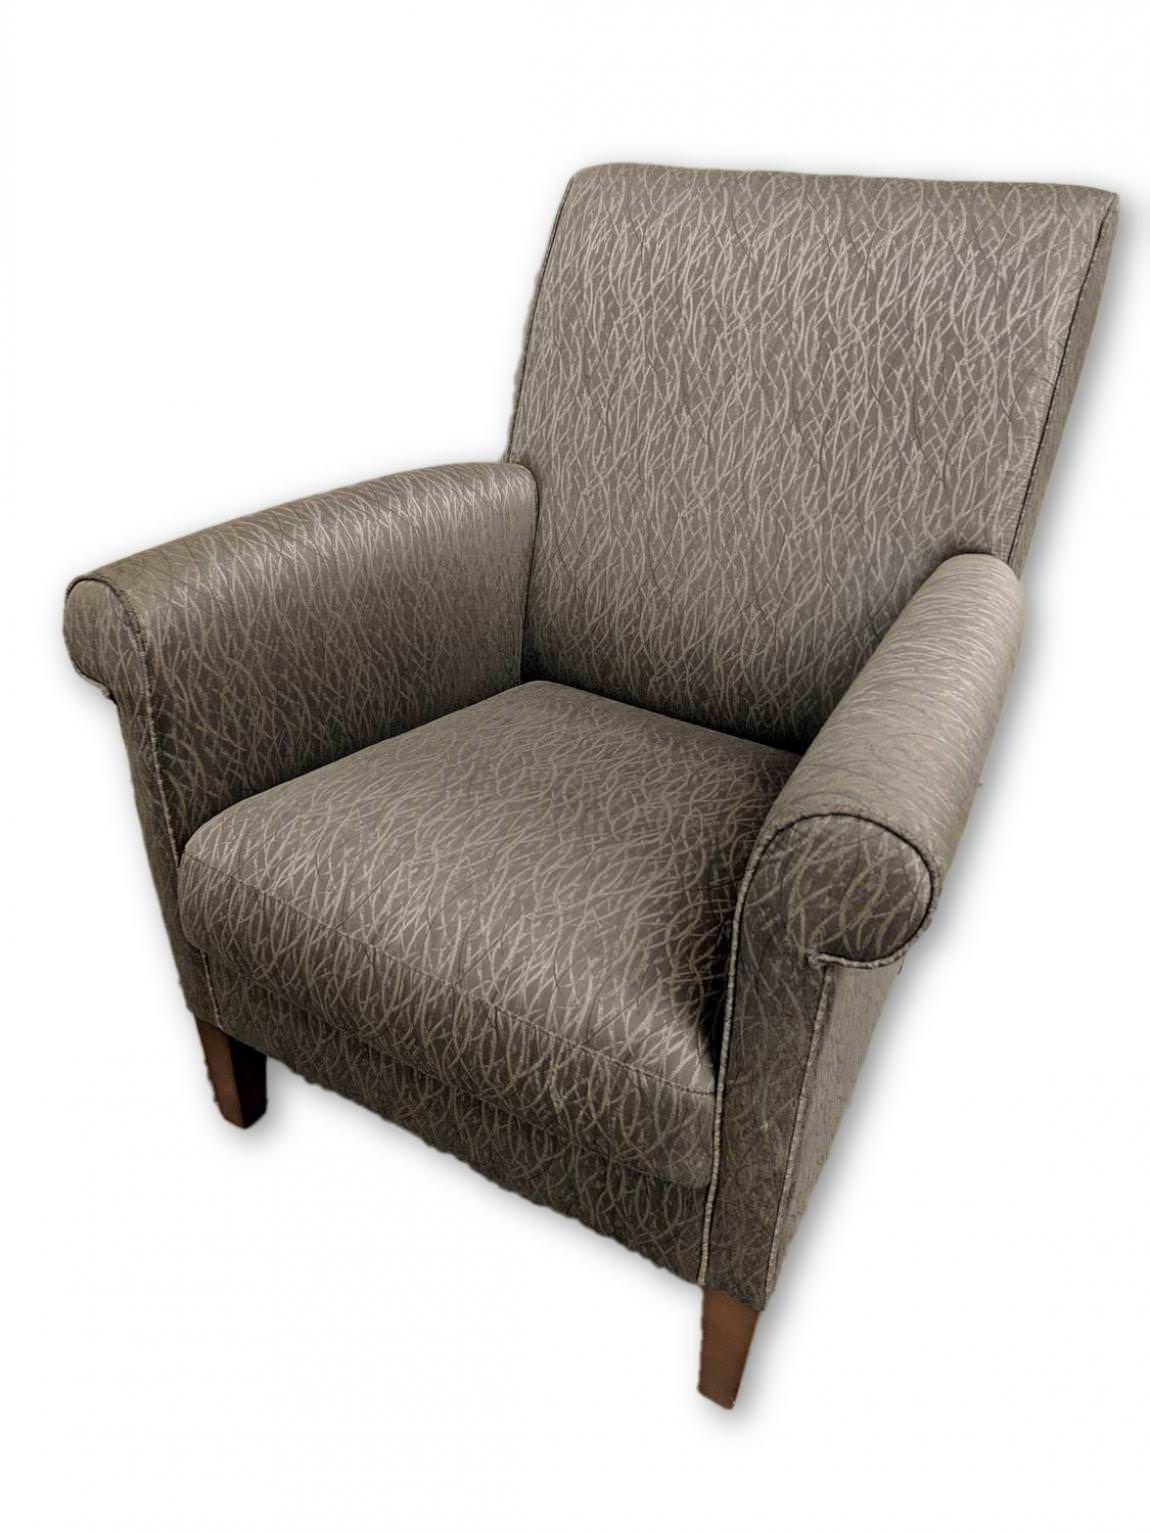 Brayton International Pasio Lounge Chairs